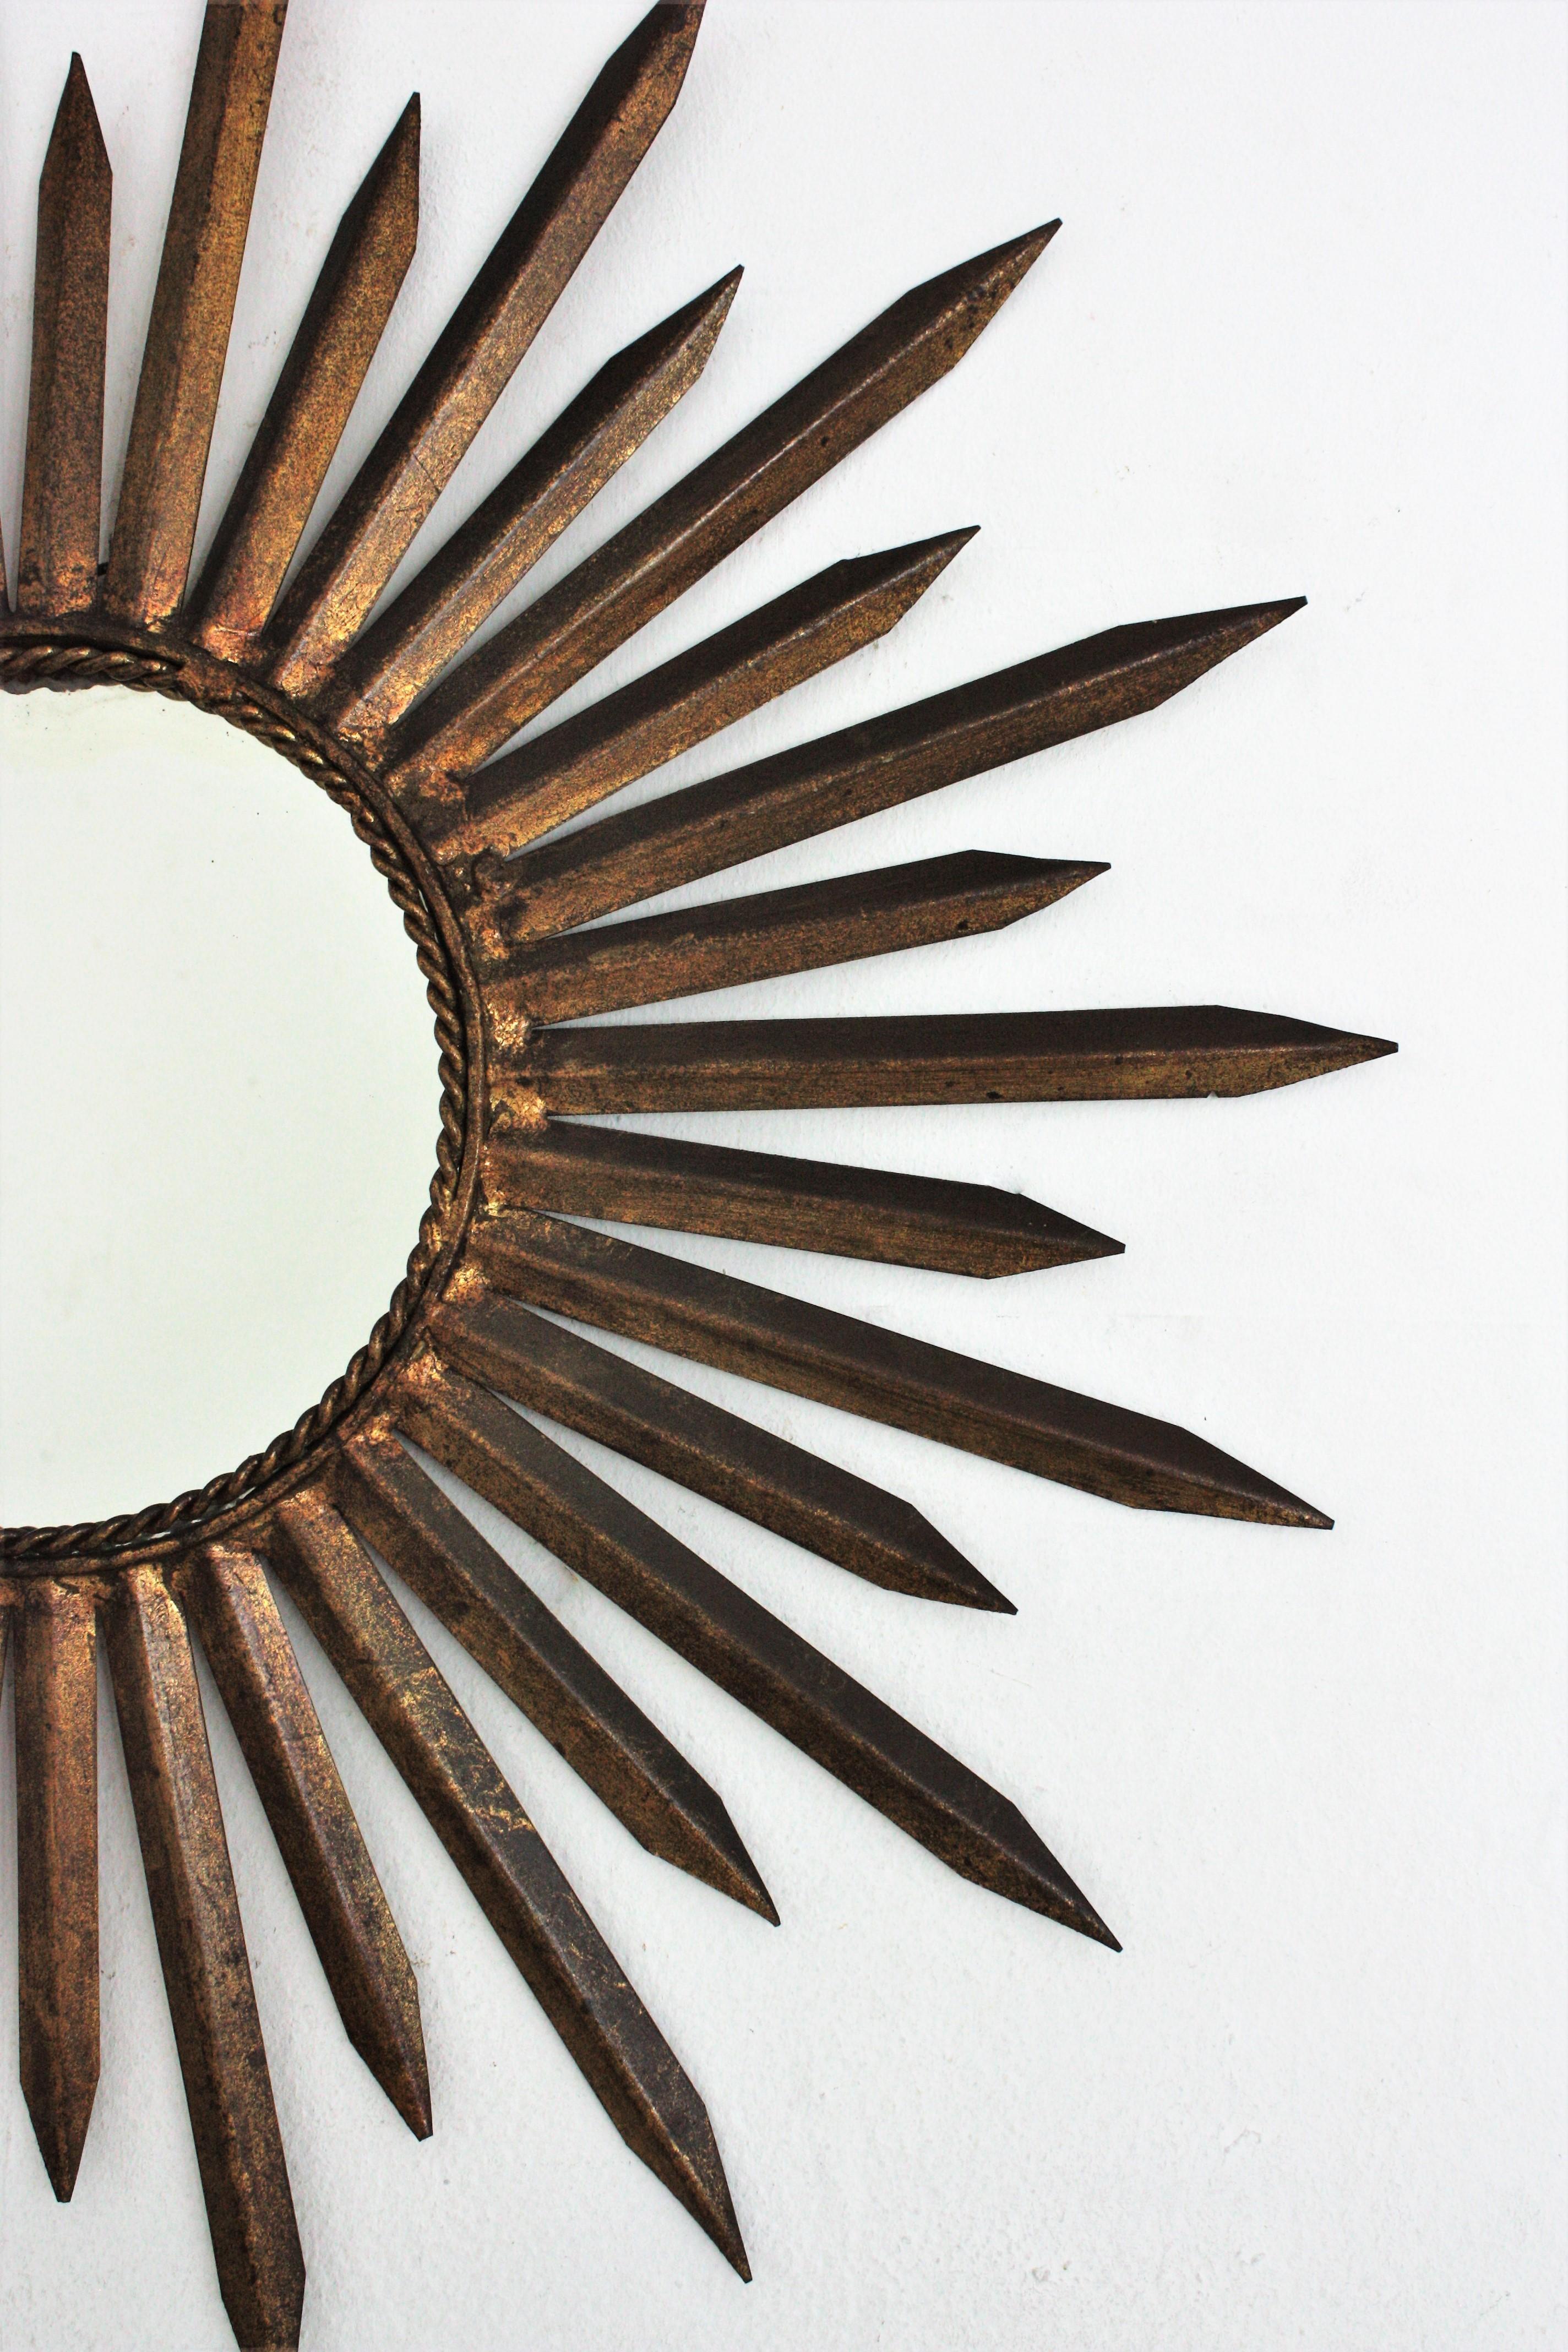 French Sunburst Starburst Mirror in Gilt Iron, Gilbert Poillerat Style For Sale 1